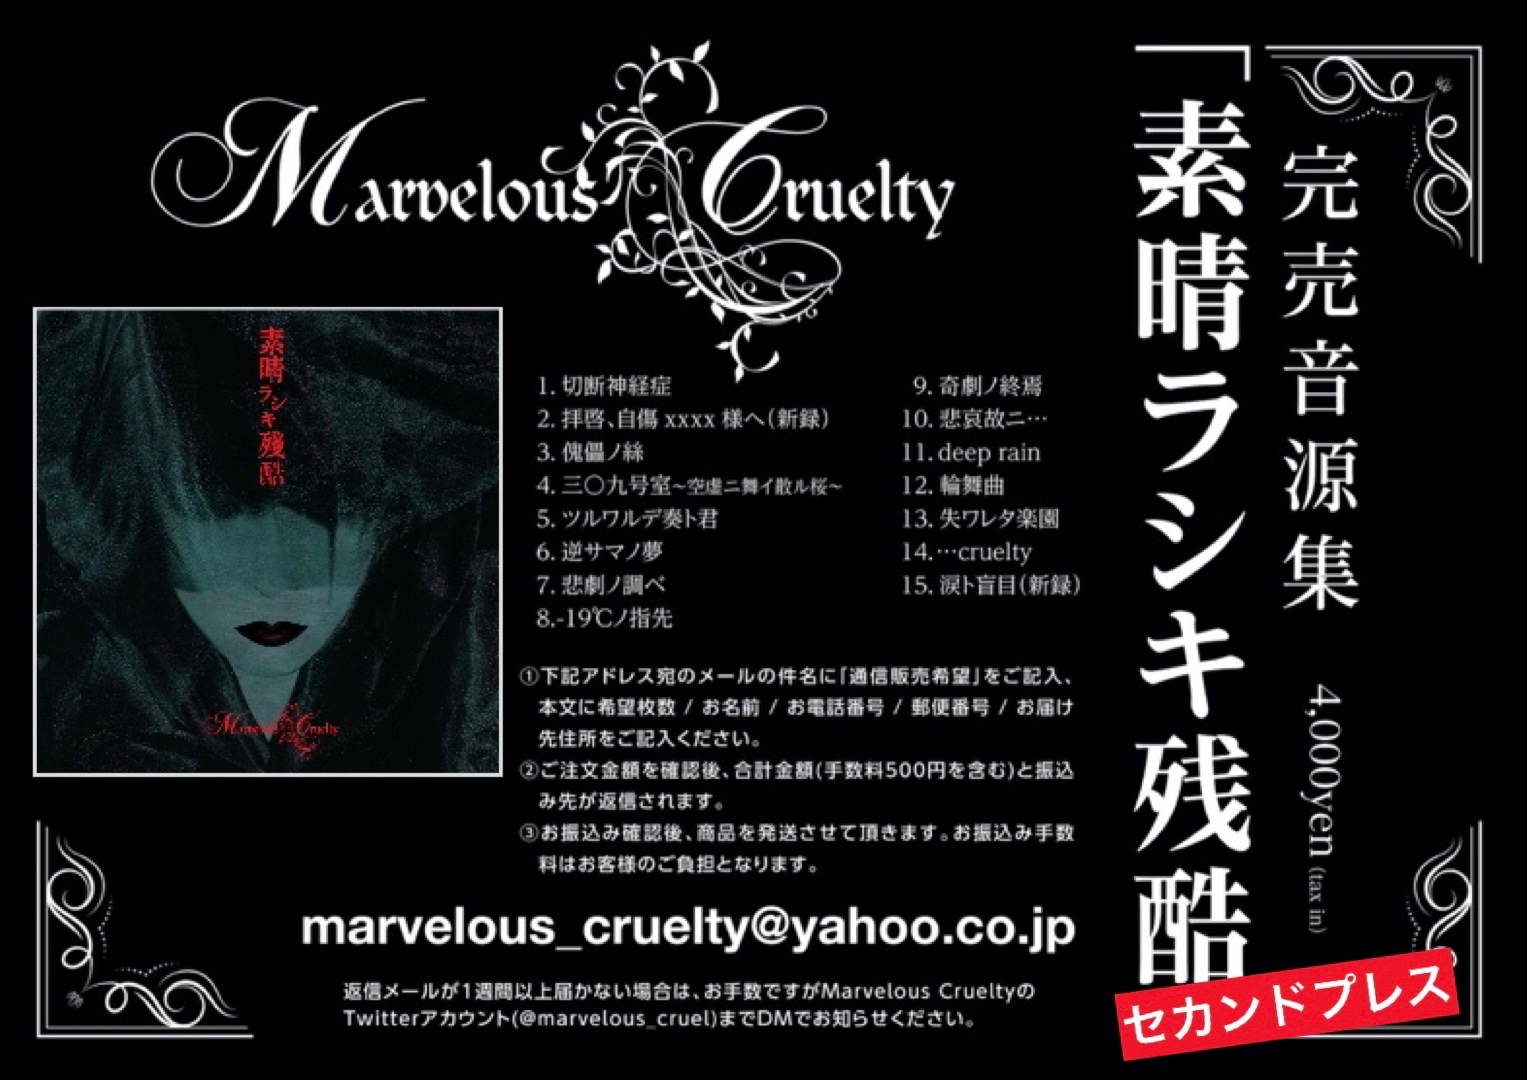 Marvelous Cruelty will suspend activities indefinitely - News